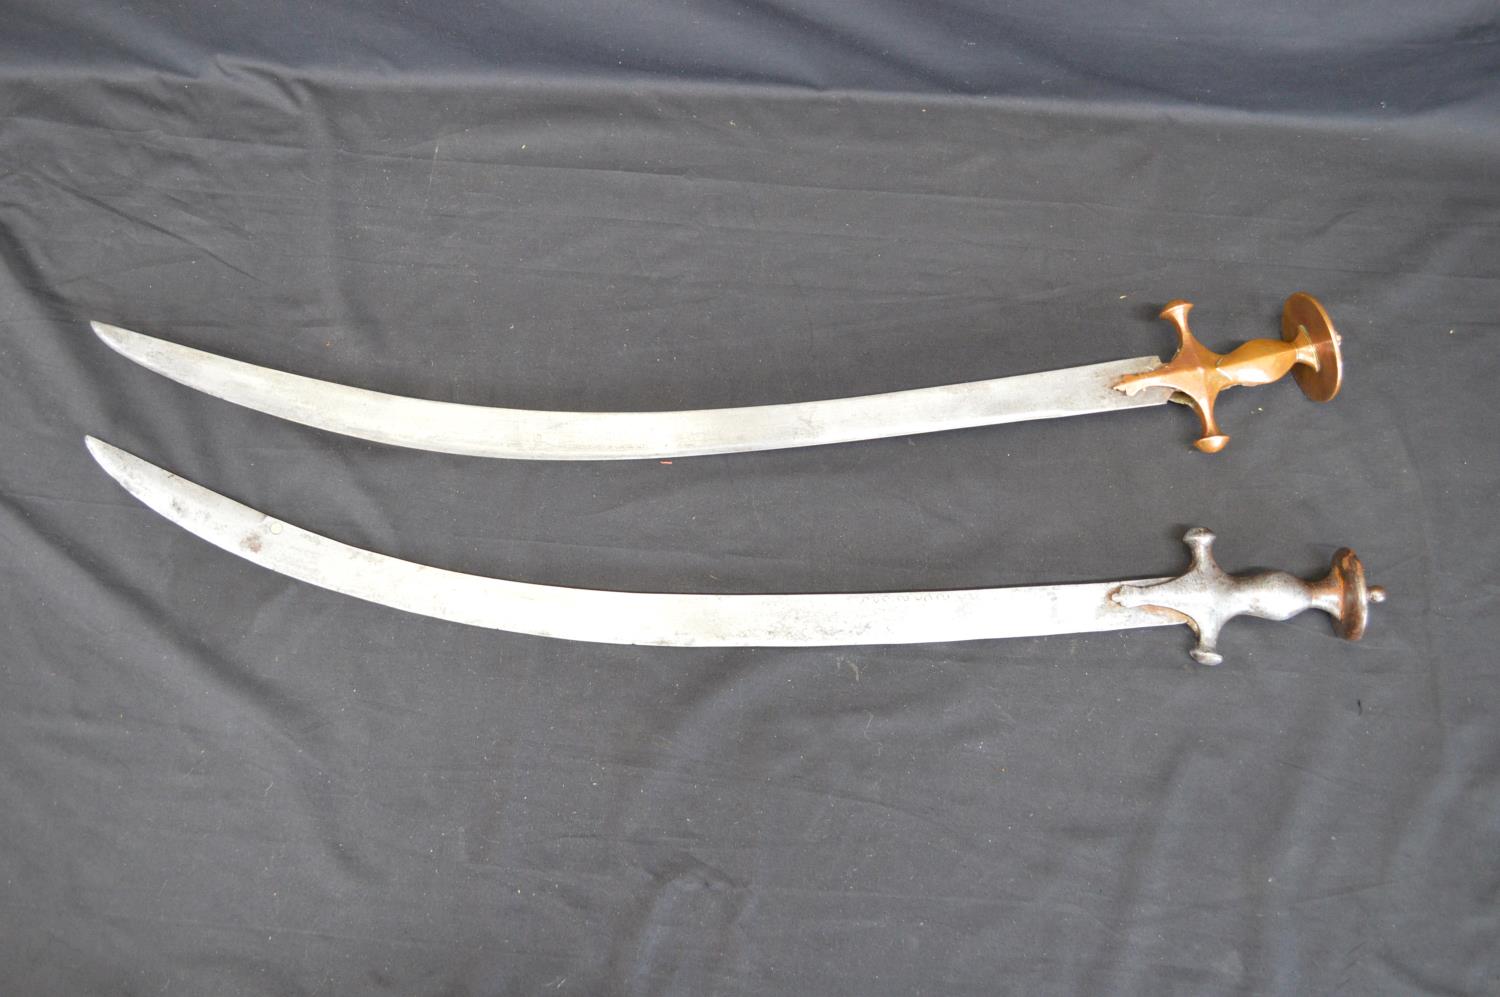 Two Tulwar swords having curved steel blades - 82.5cm x 84cm long Please note descriptions are not - Bild 2 aus 4